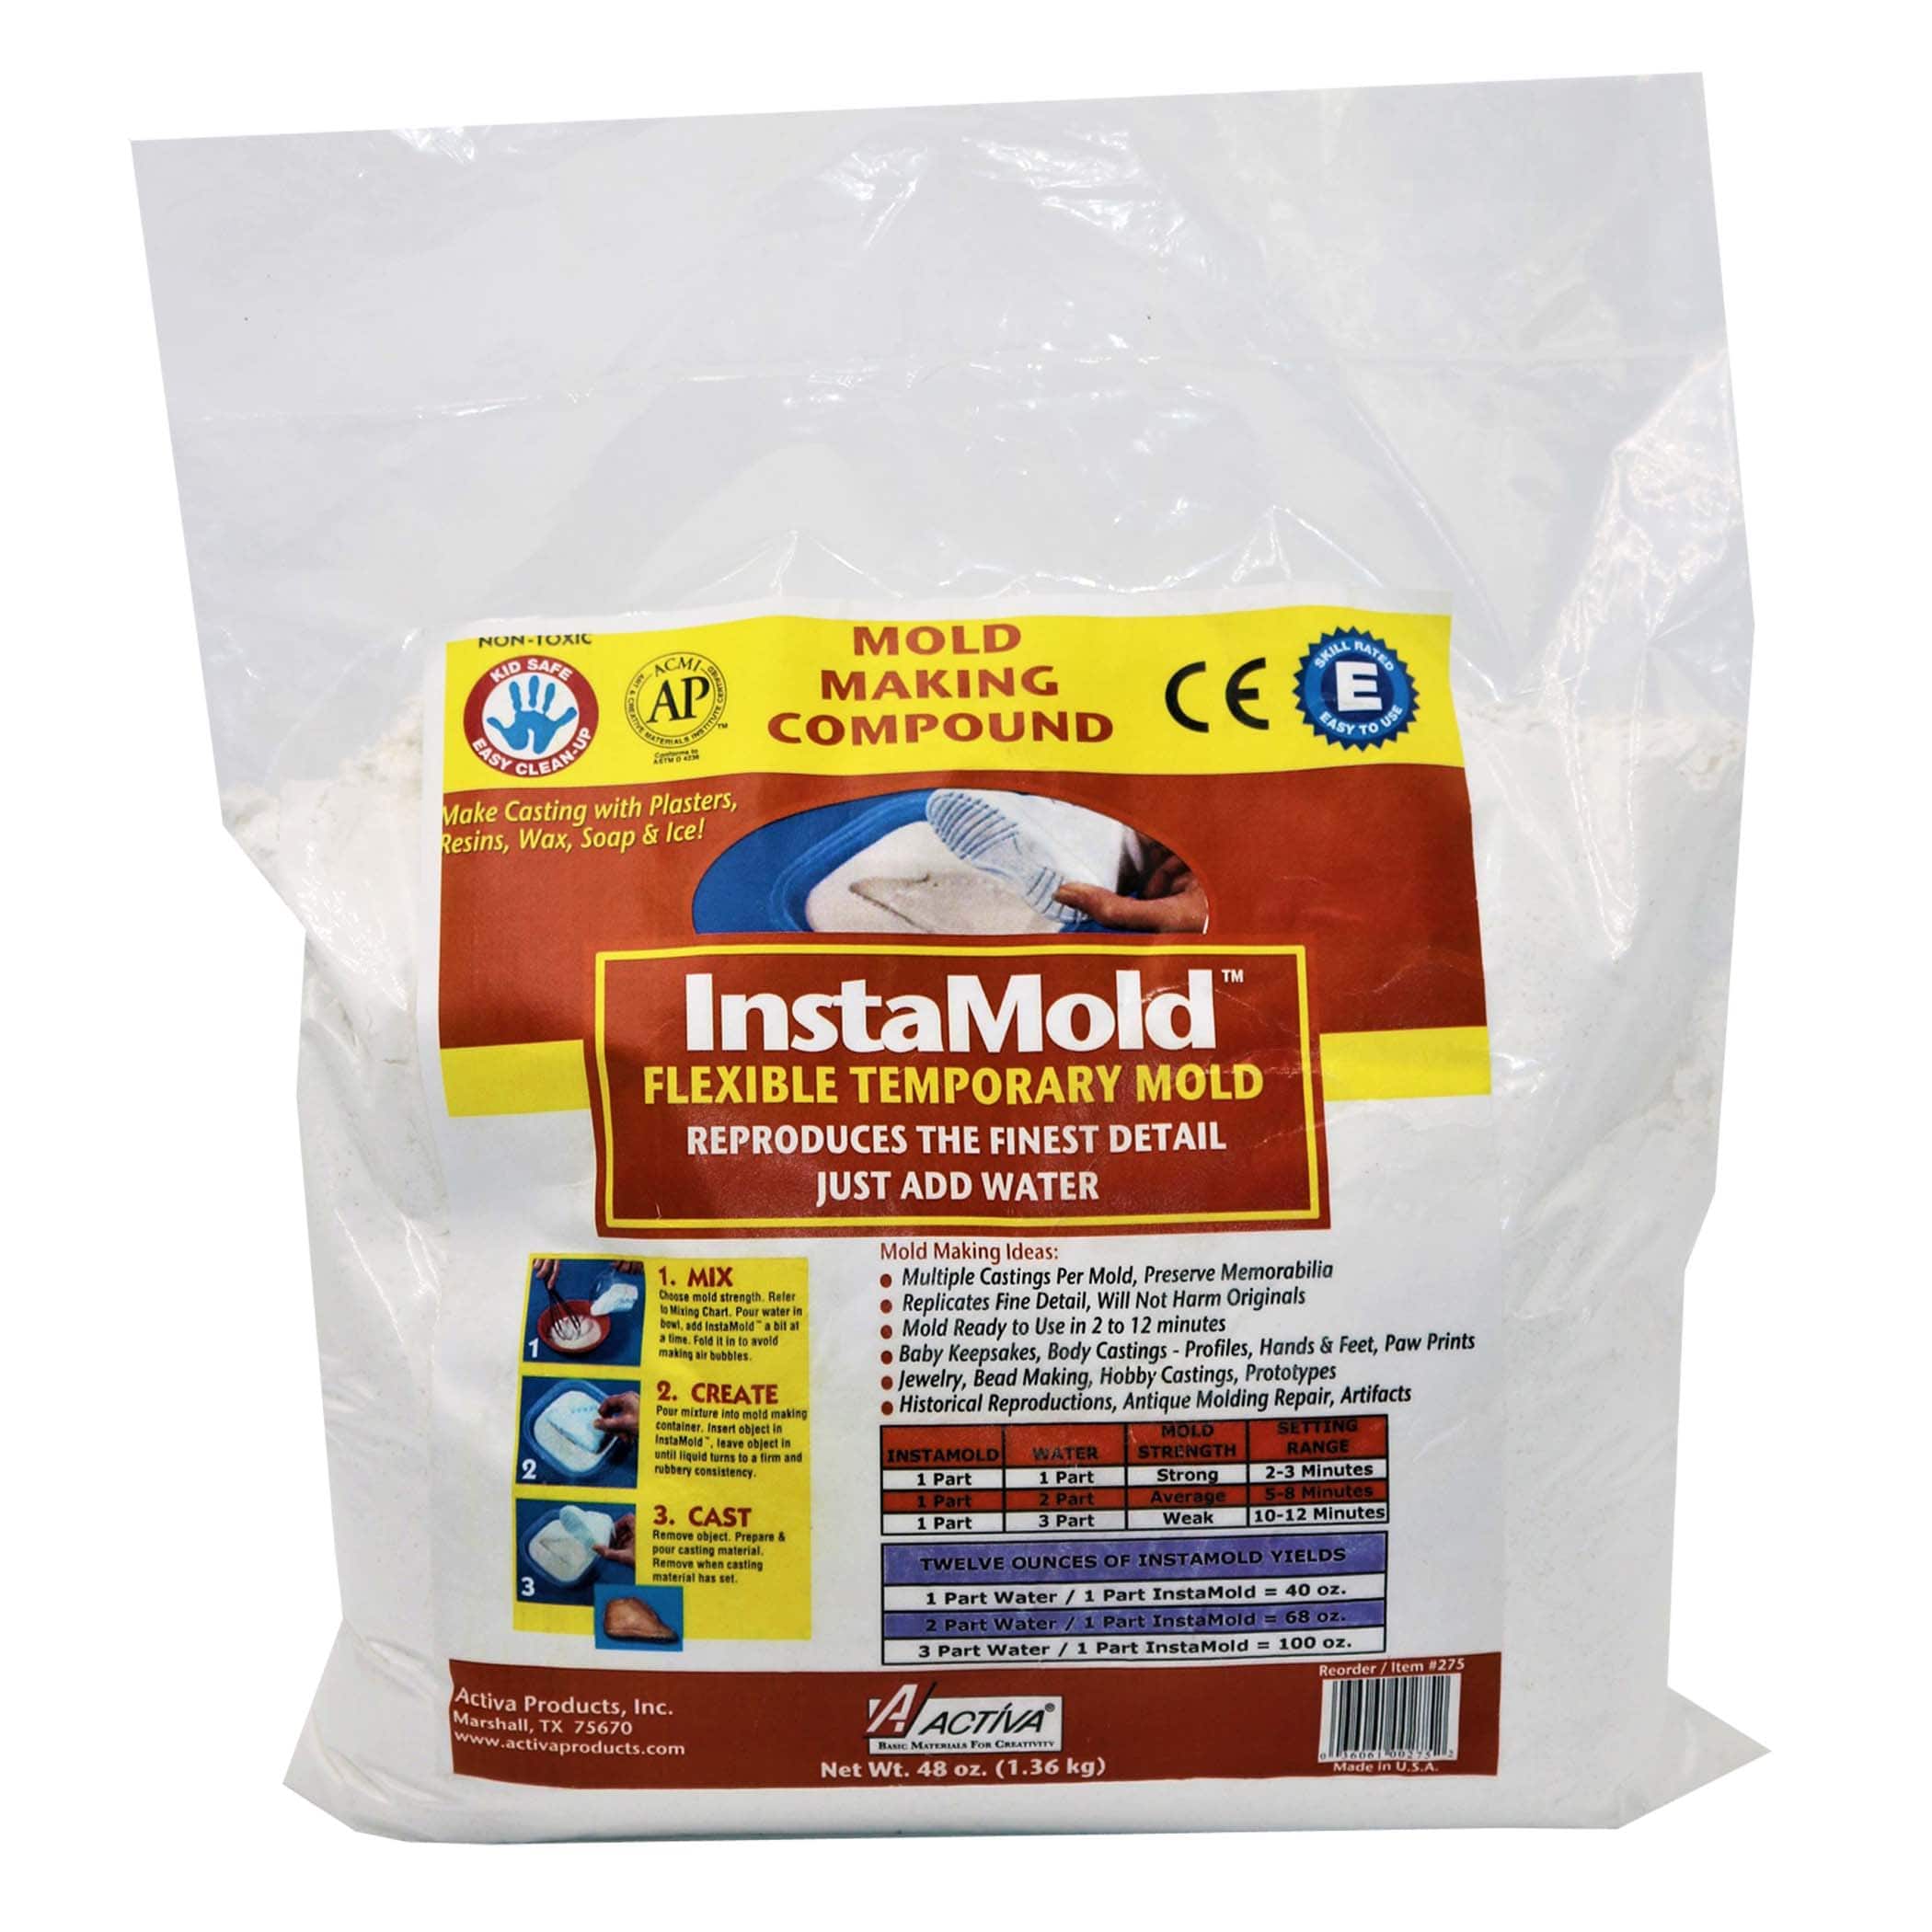 ISTA  Metamolds: Molding a mold